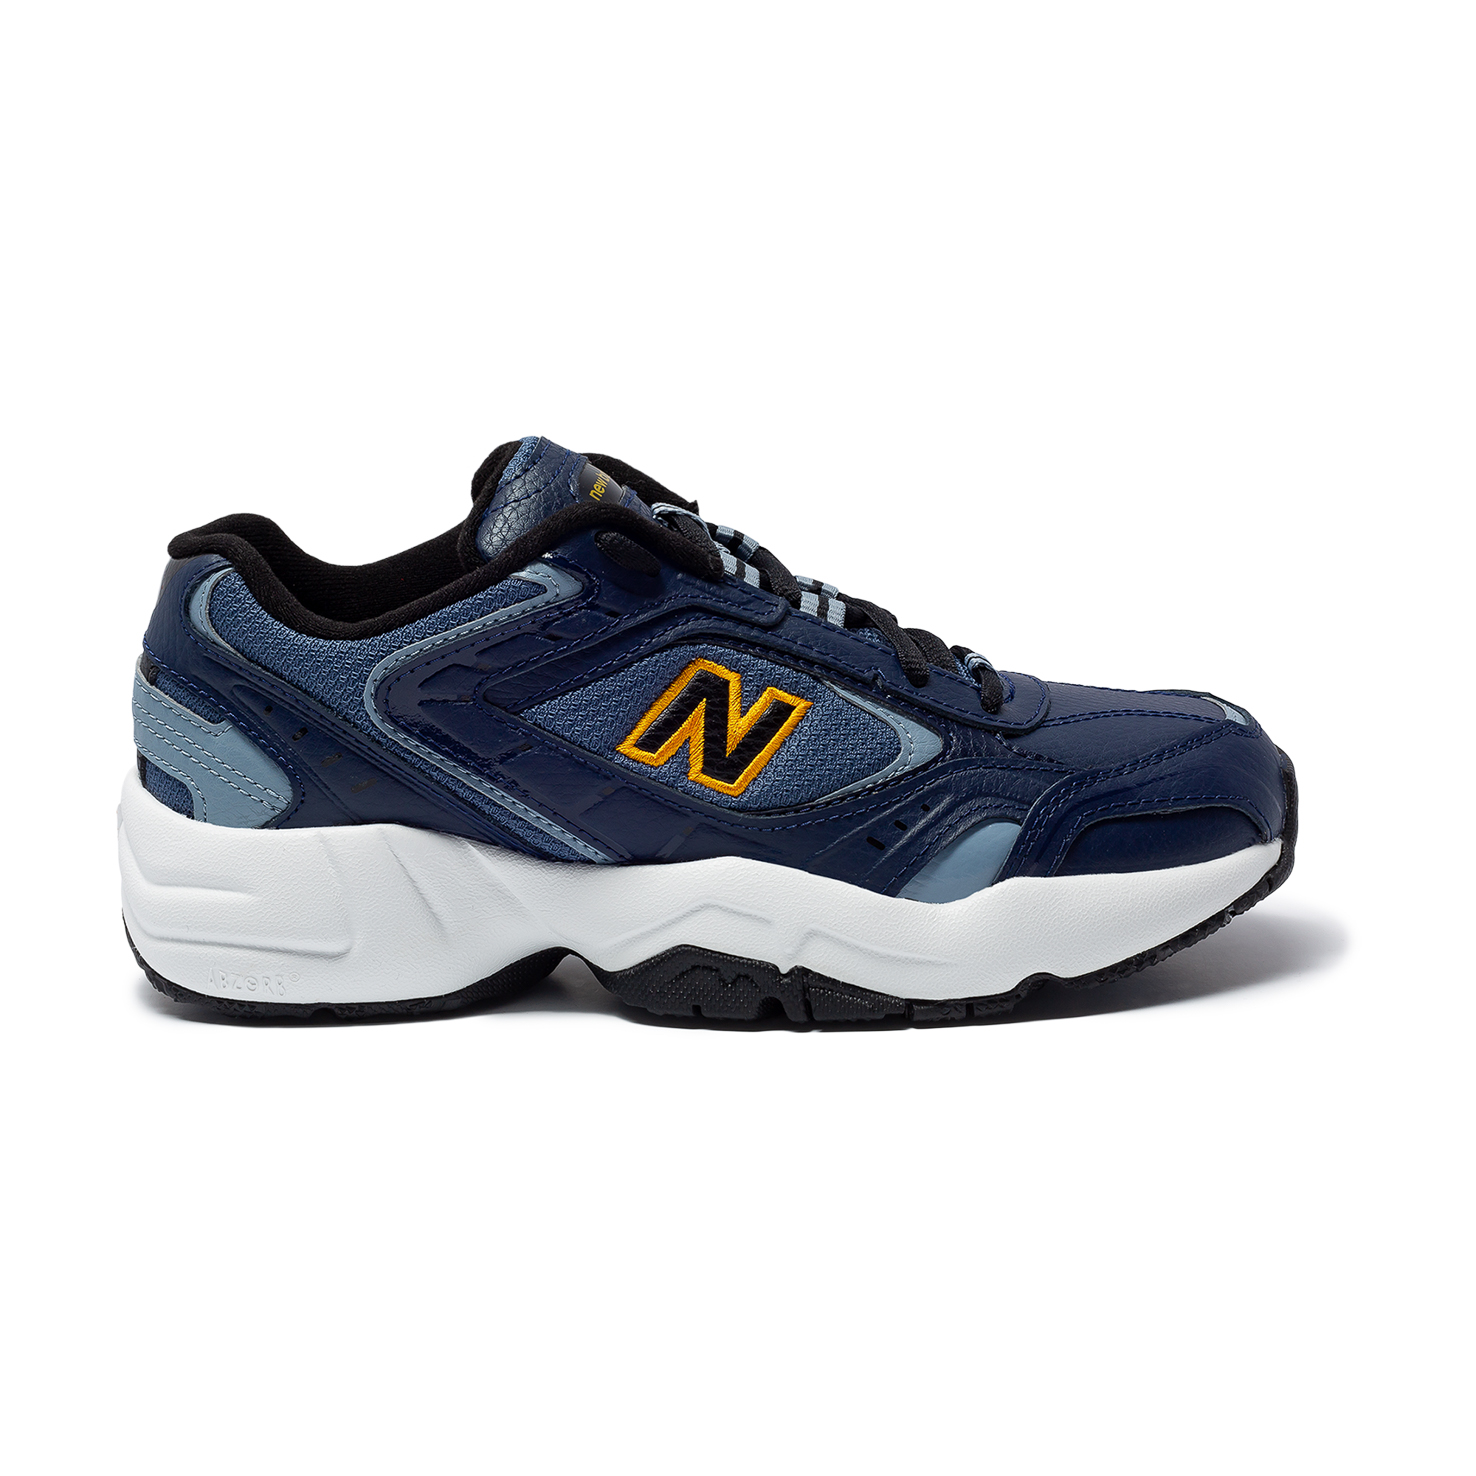 452 New Balance, размер 38, цвет синий NBWX452 - фото 1